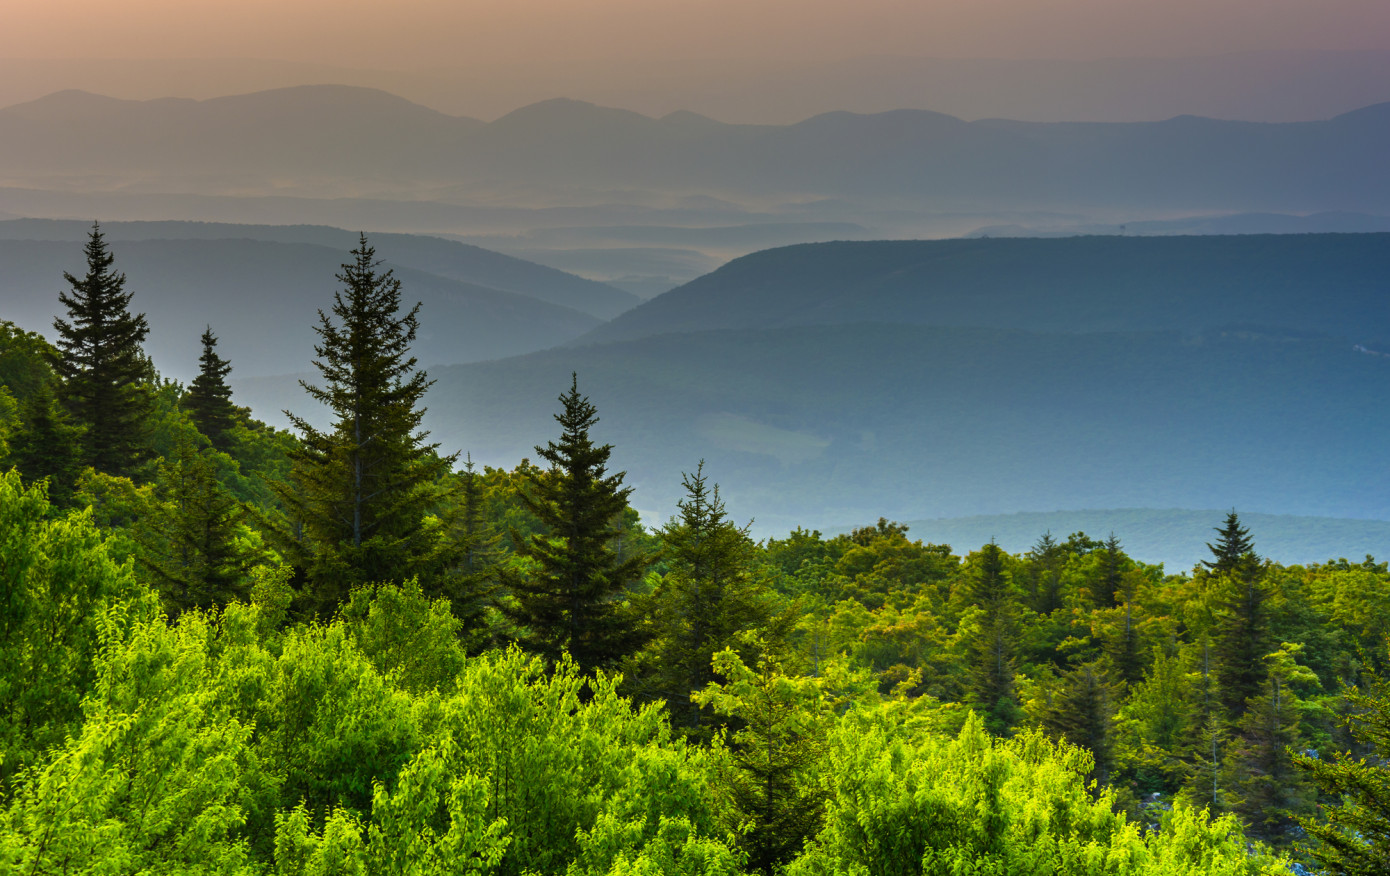 Domain Timber Advisors to lead investment management of Virginia timberland portfolio